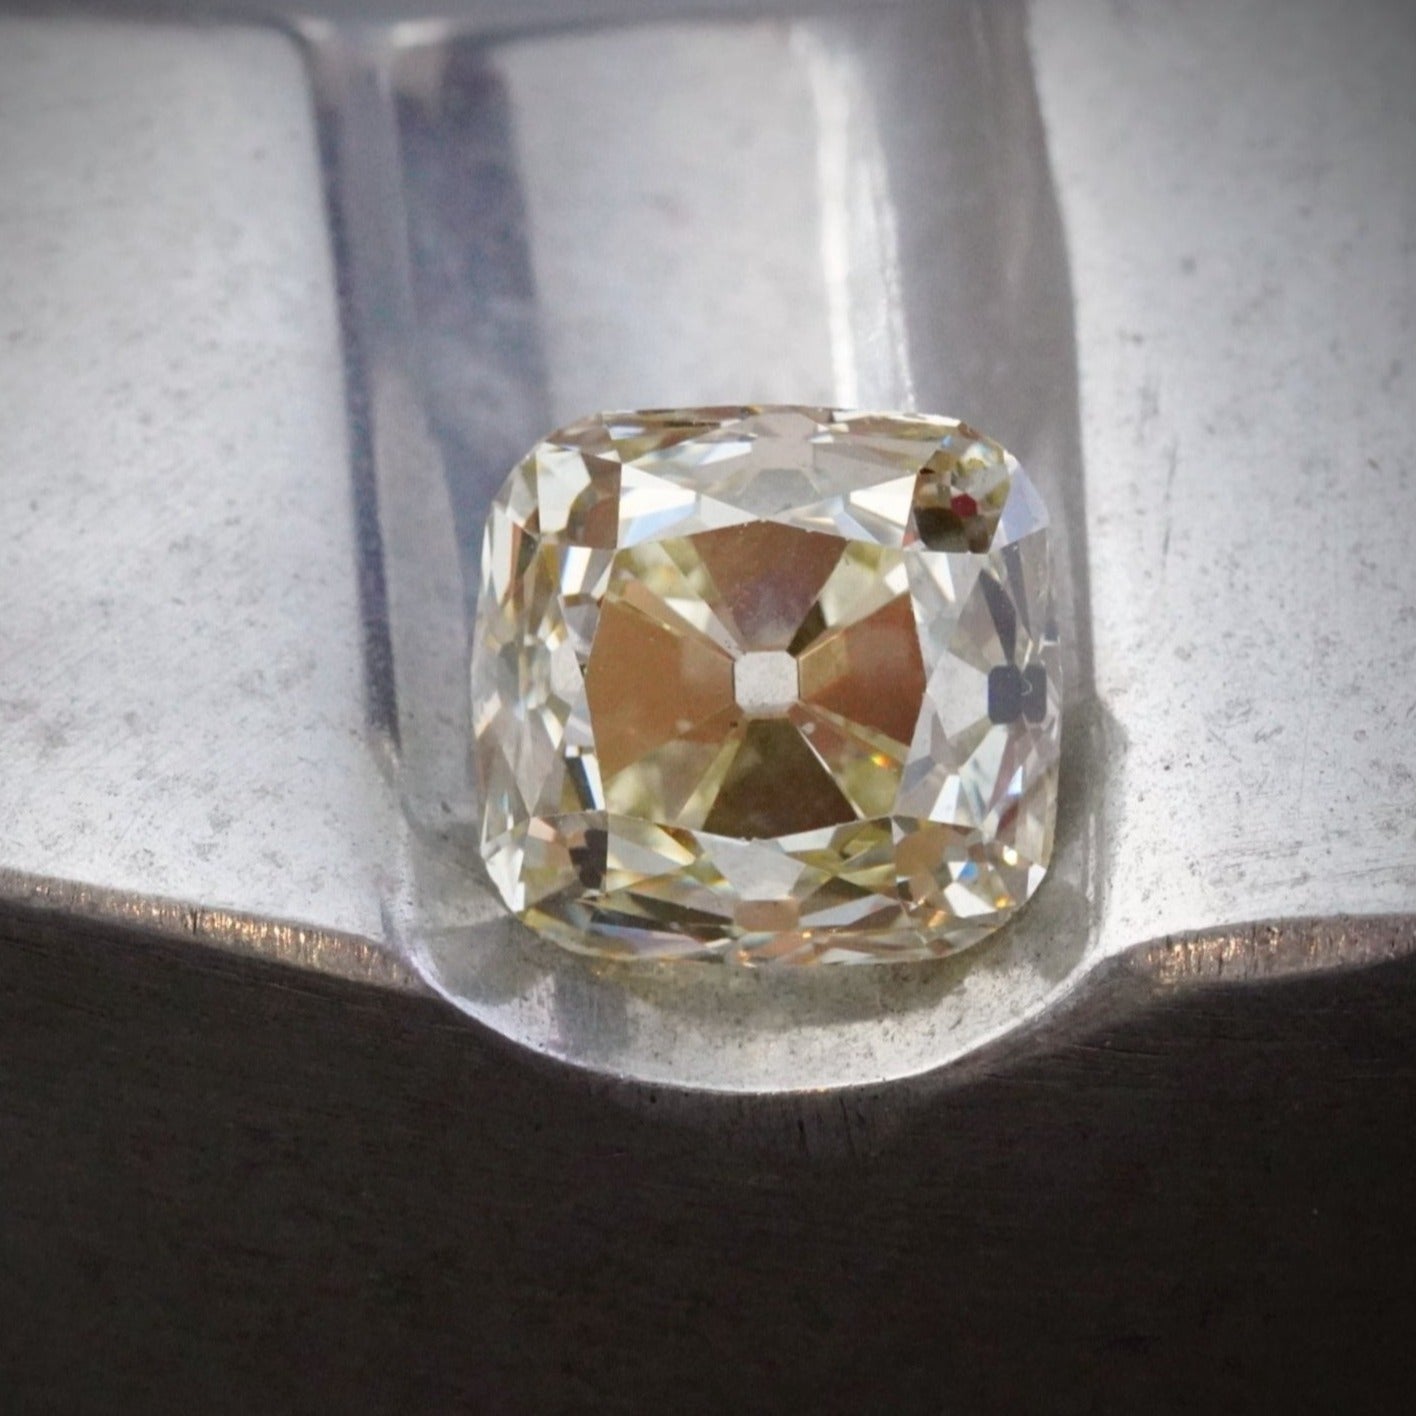 Peruzzi Cut Diamond, 10.57 ct